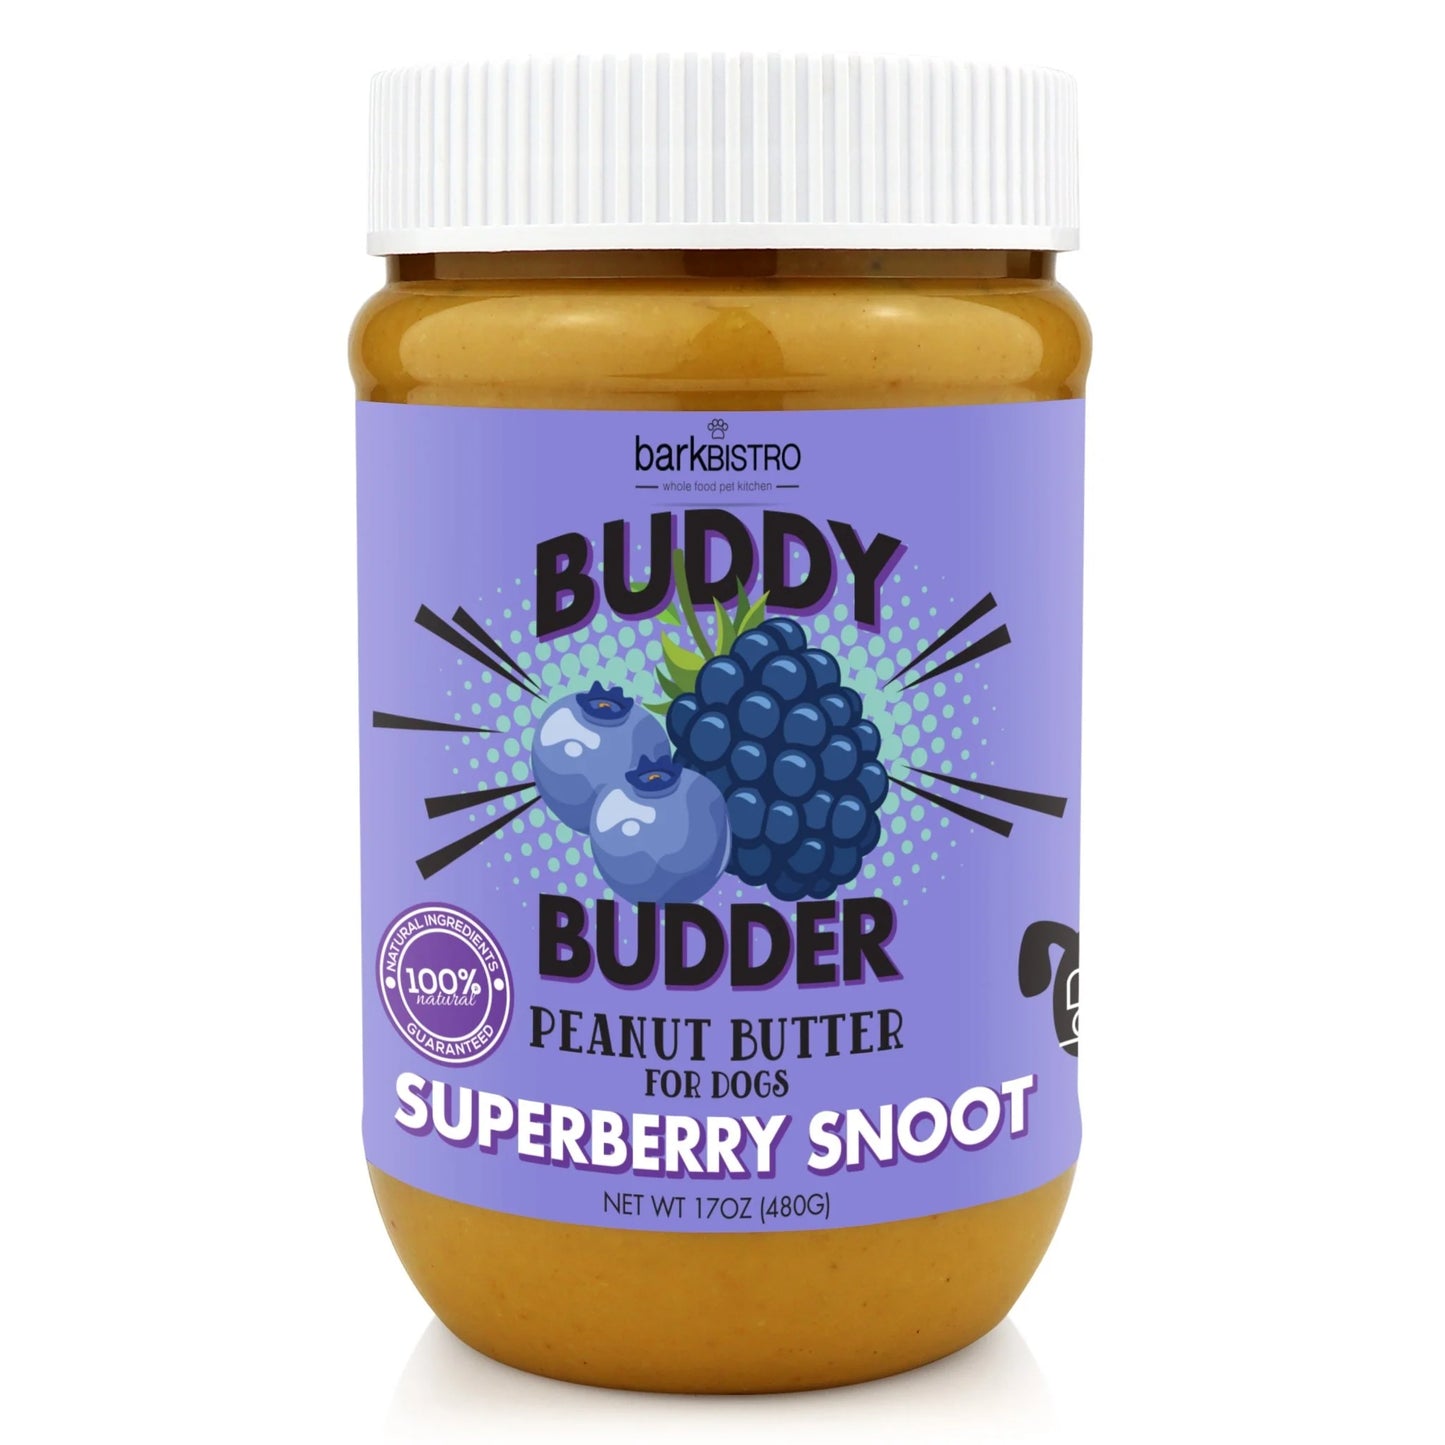 Superberry Snoot Buddy Budder